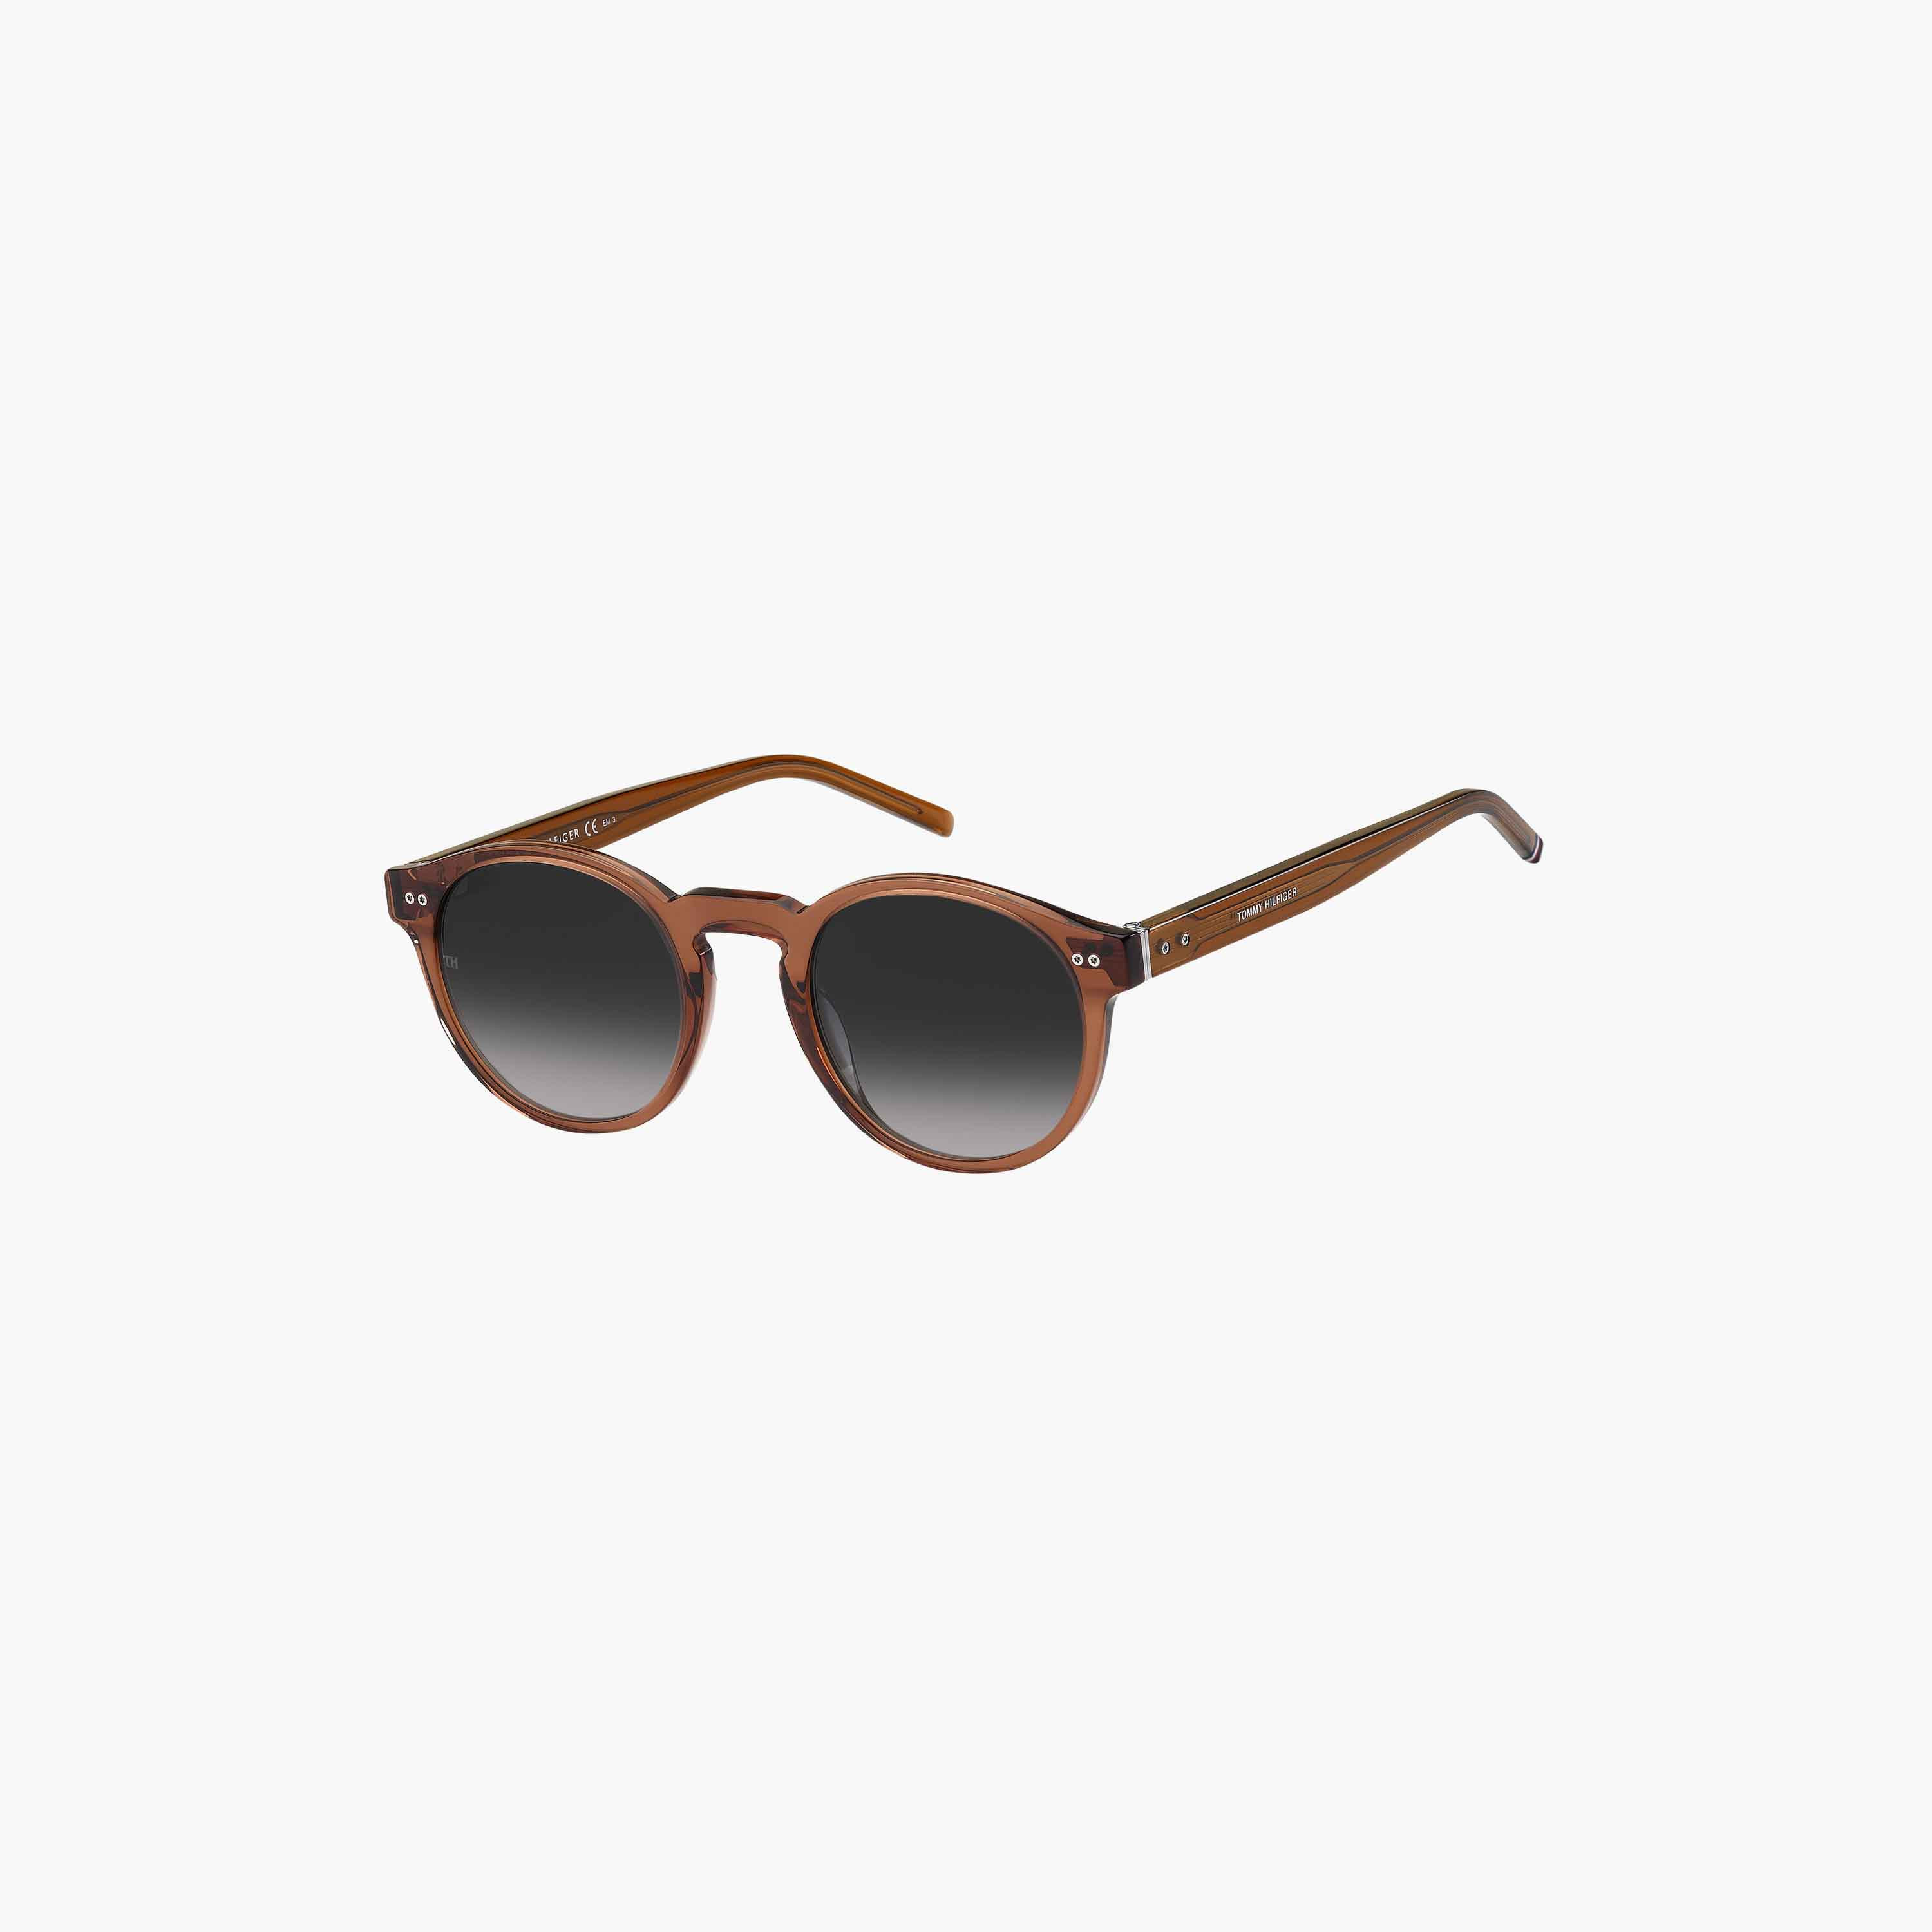 Tommy Hilfiger Th 2052/s women Sunglasses online sale